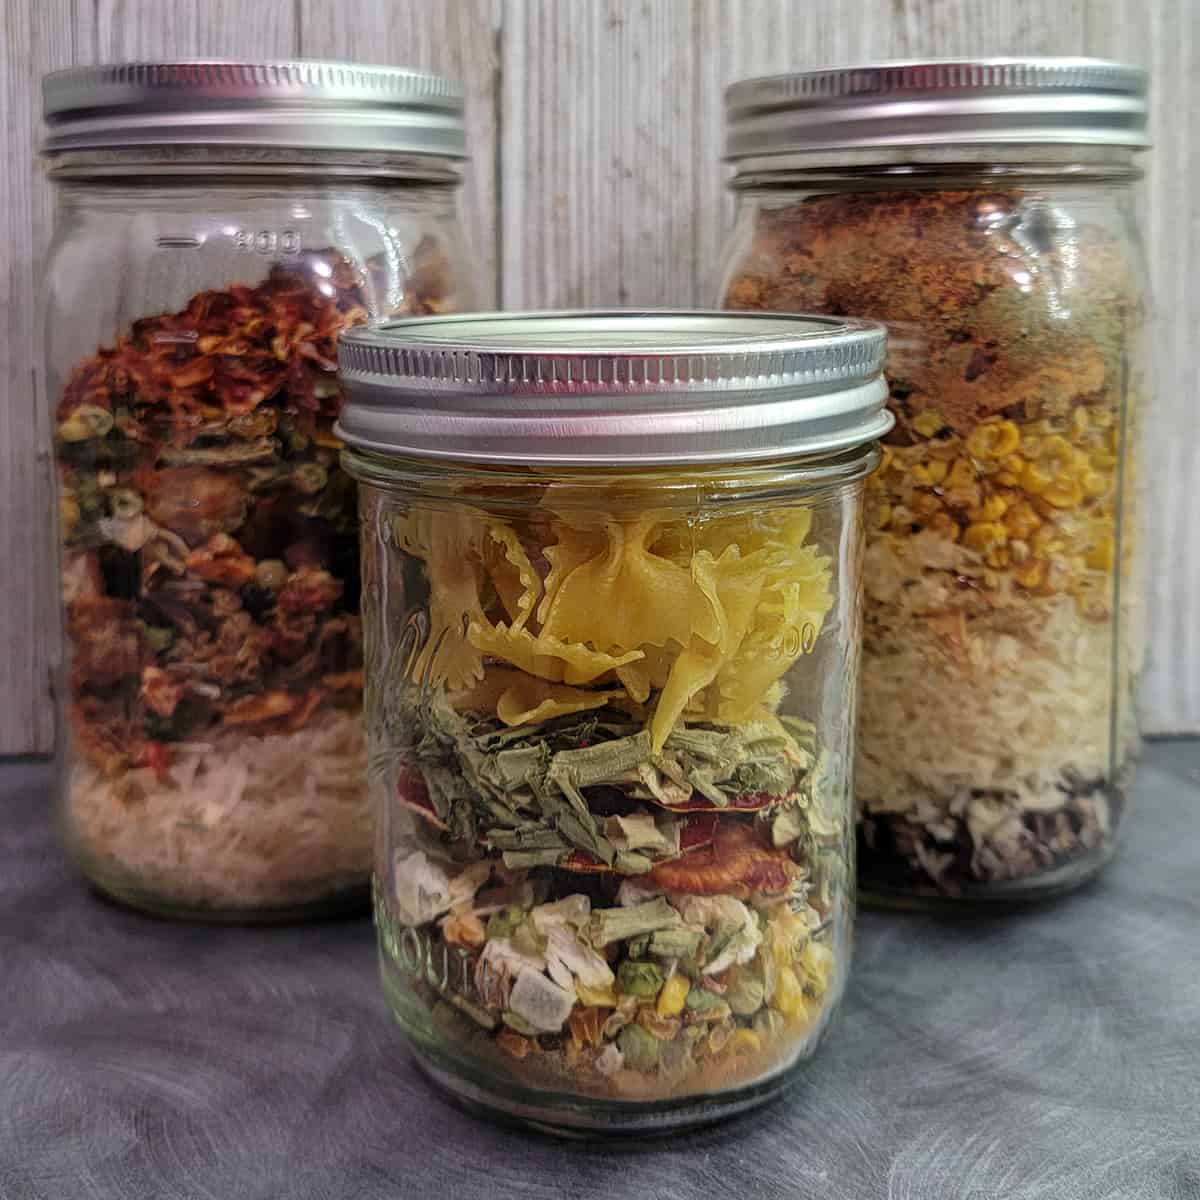 How to Vacuum Seal a Mason Jar 3 Ways - Food Prep Guide - Preserving &  Storing Food